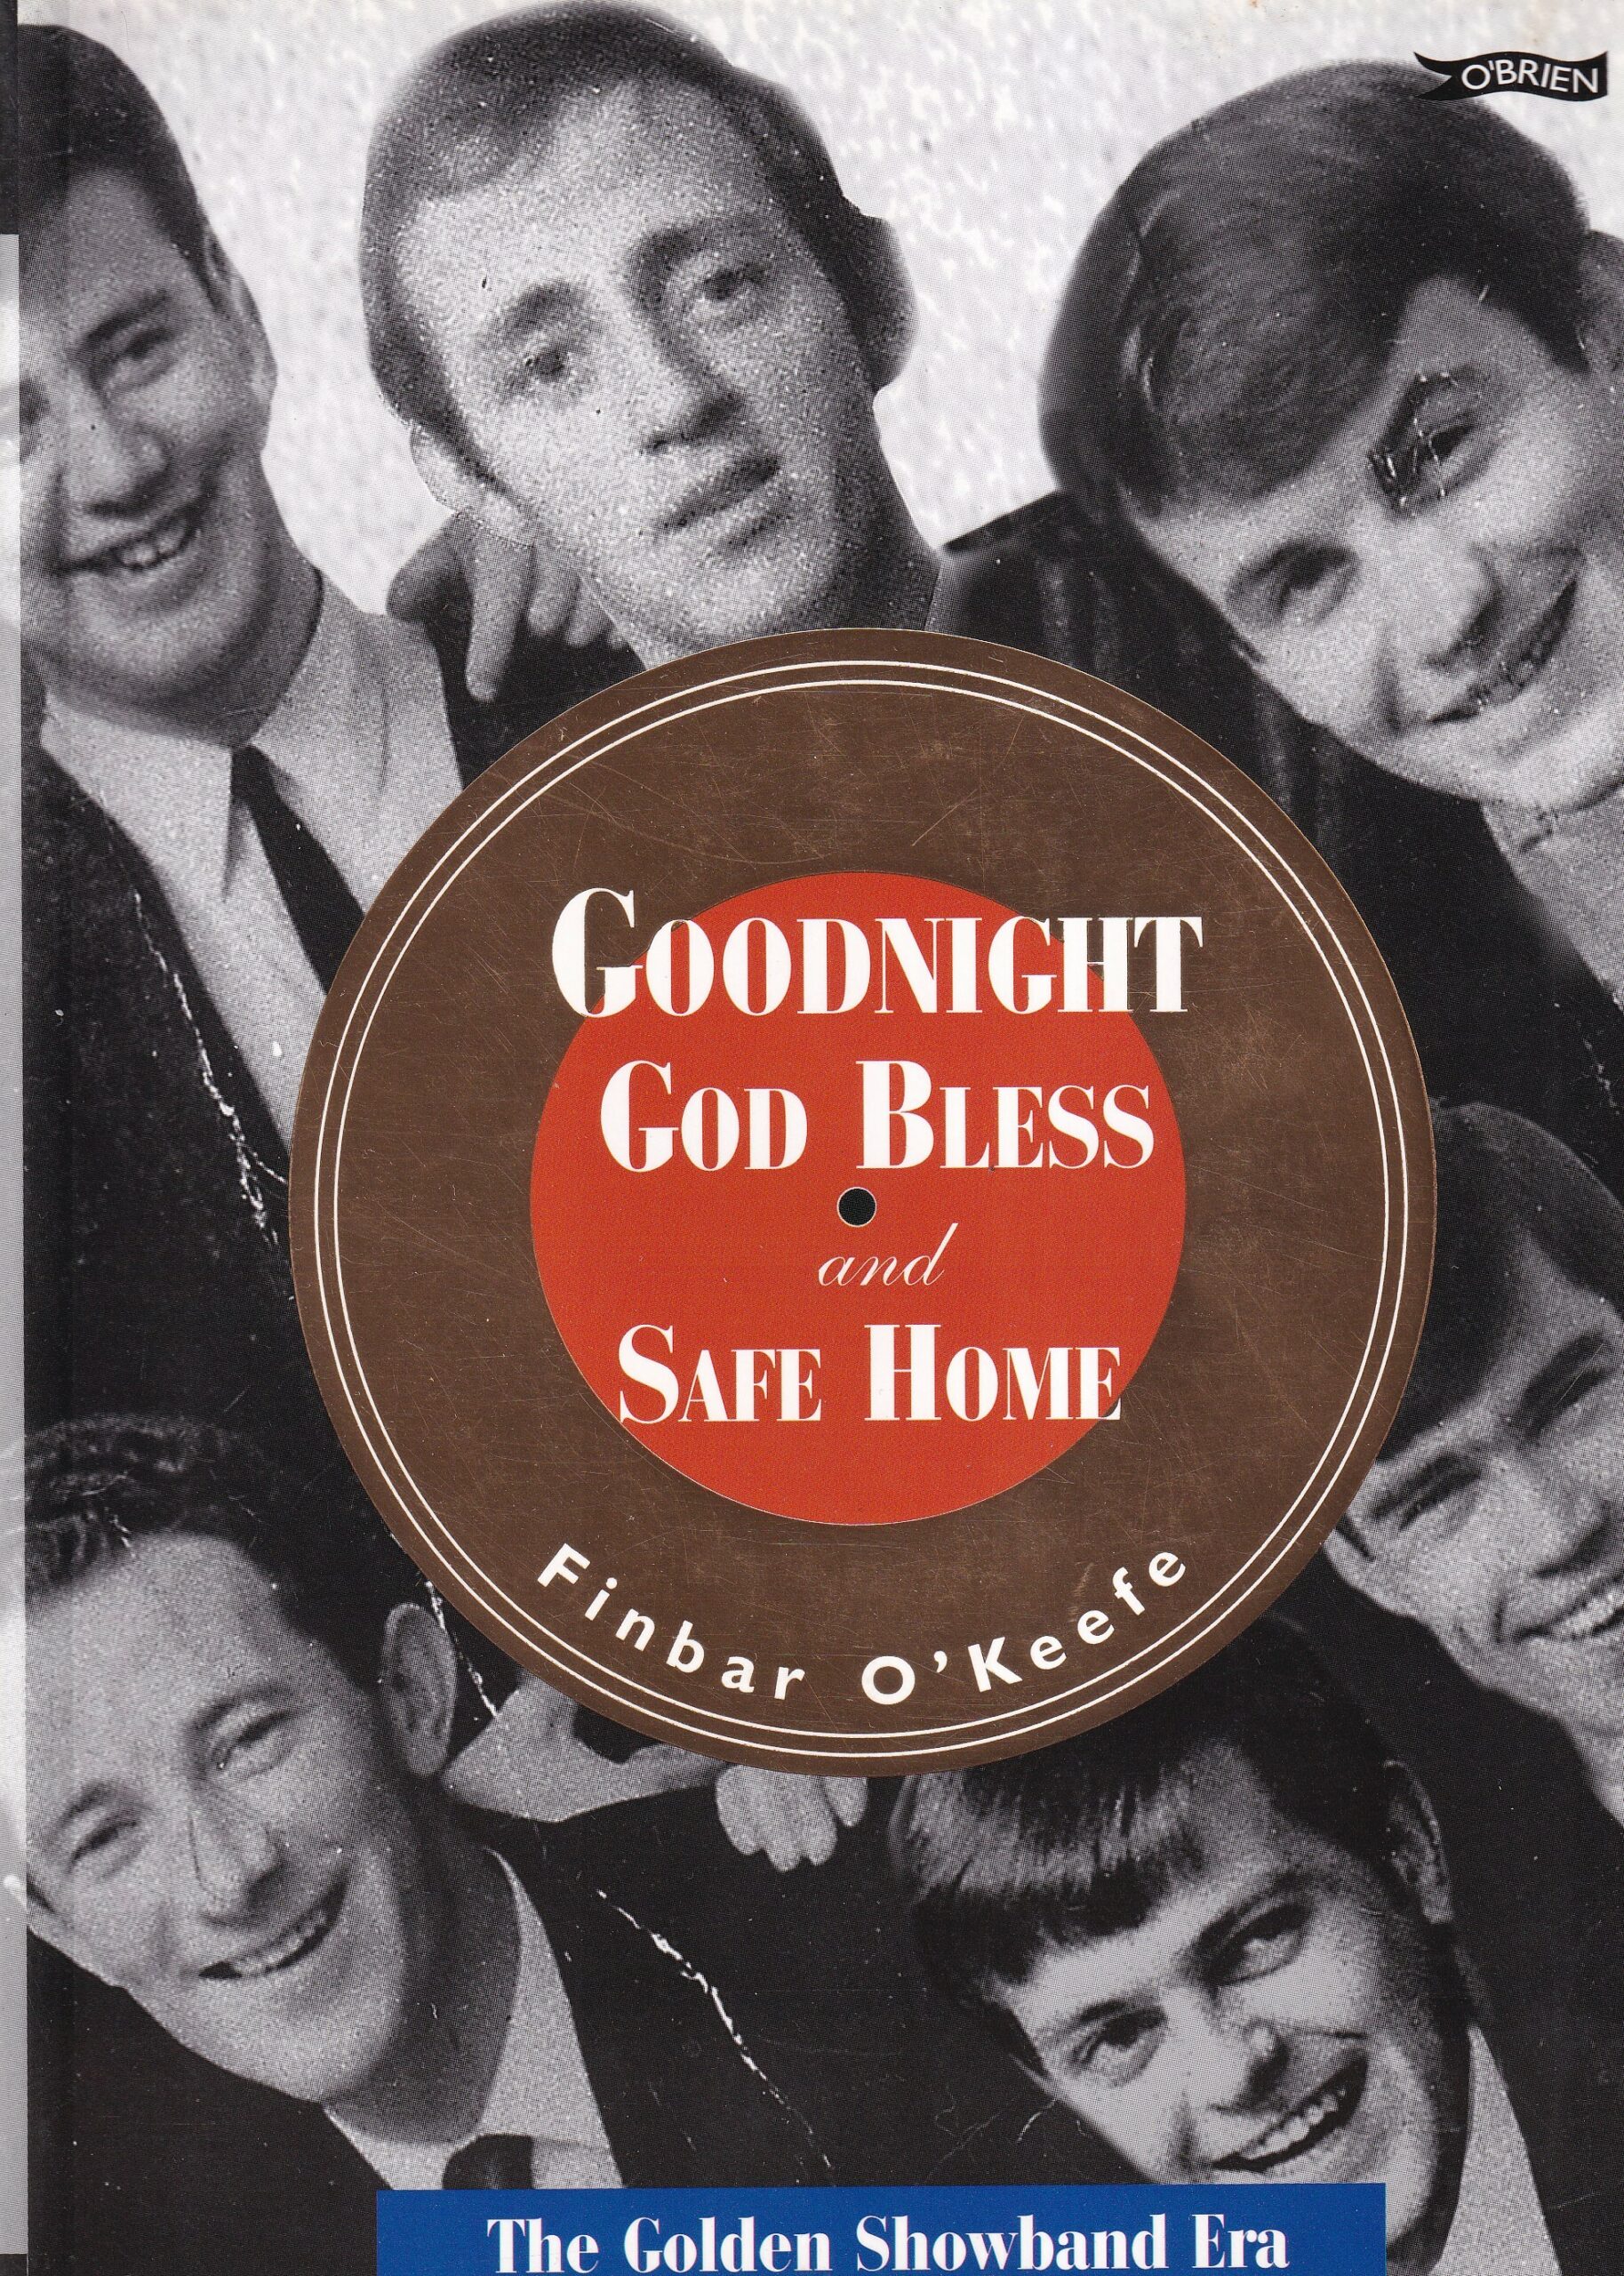 Goodnight God Bless and Safe Home: The Golden Showband Era | Finbar O'Keefe | Charlie Byrne's